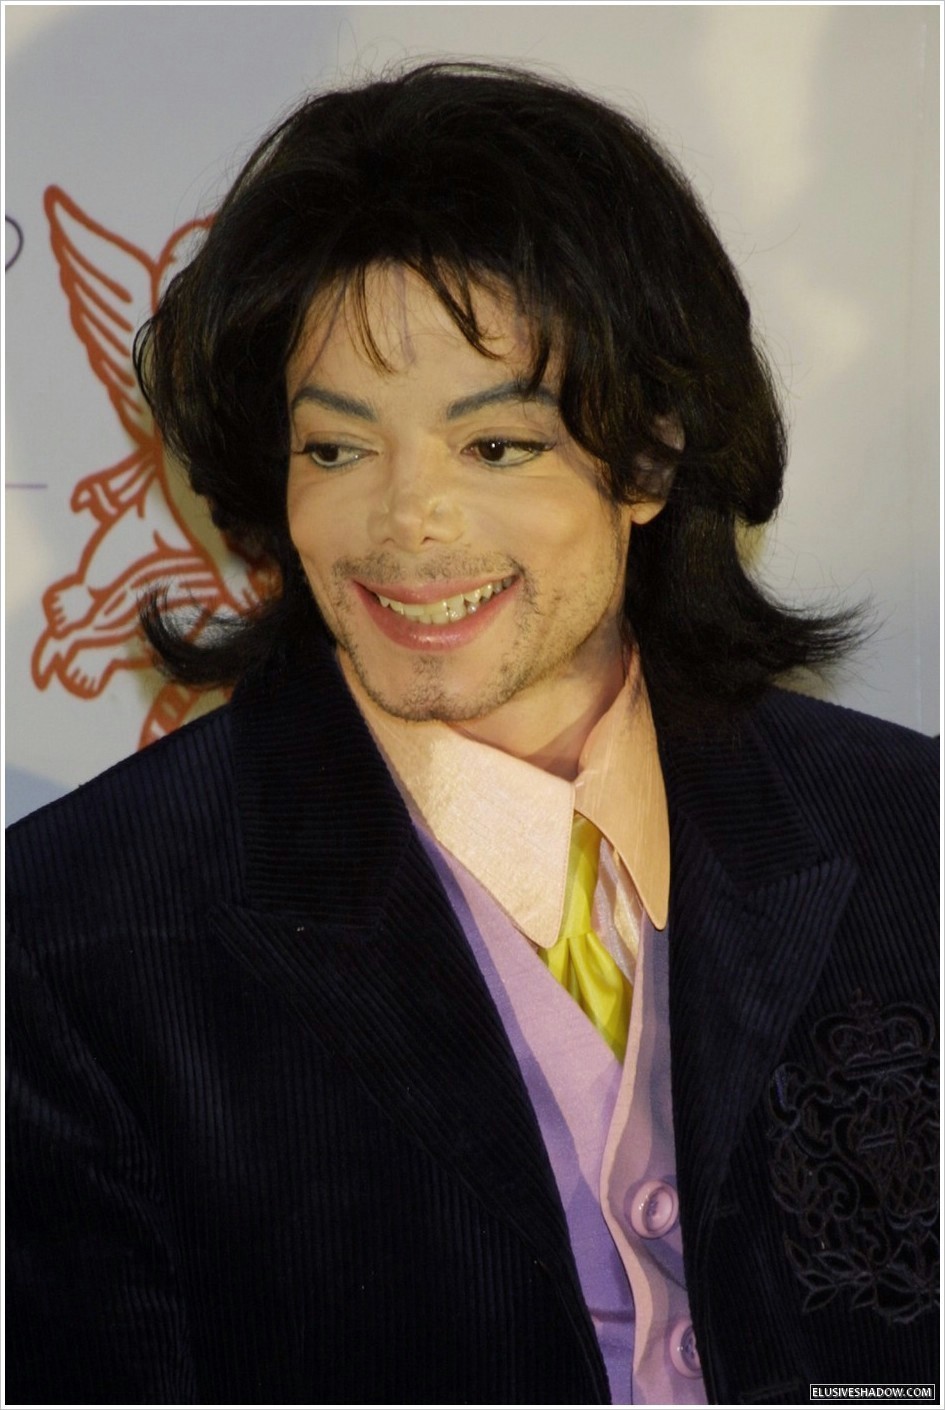 Michael Jackson Wallpaper | Michael jackson quotes, Michael jackson  wallpaper, Michael jackson smile